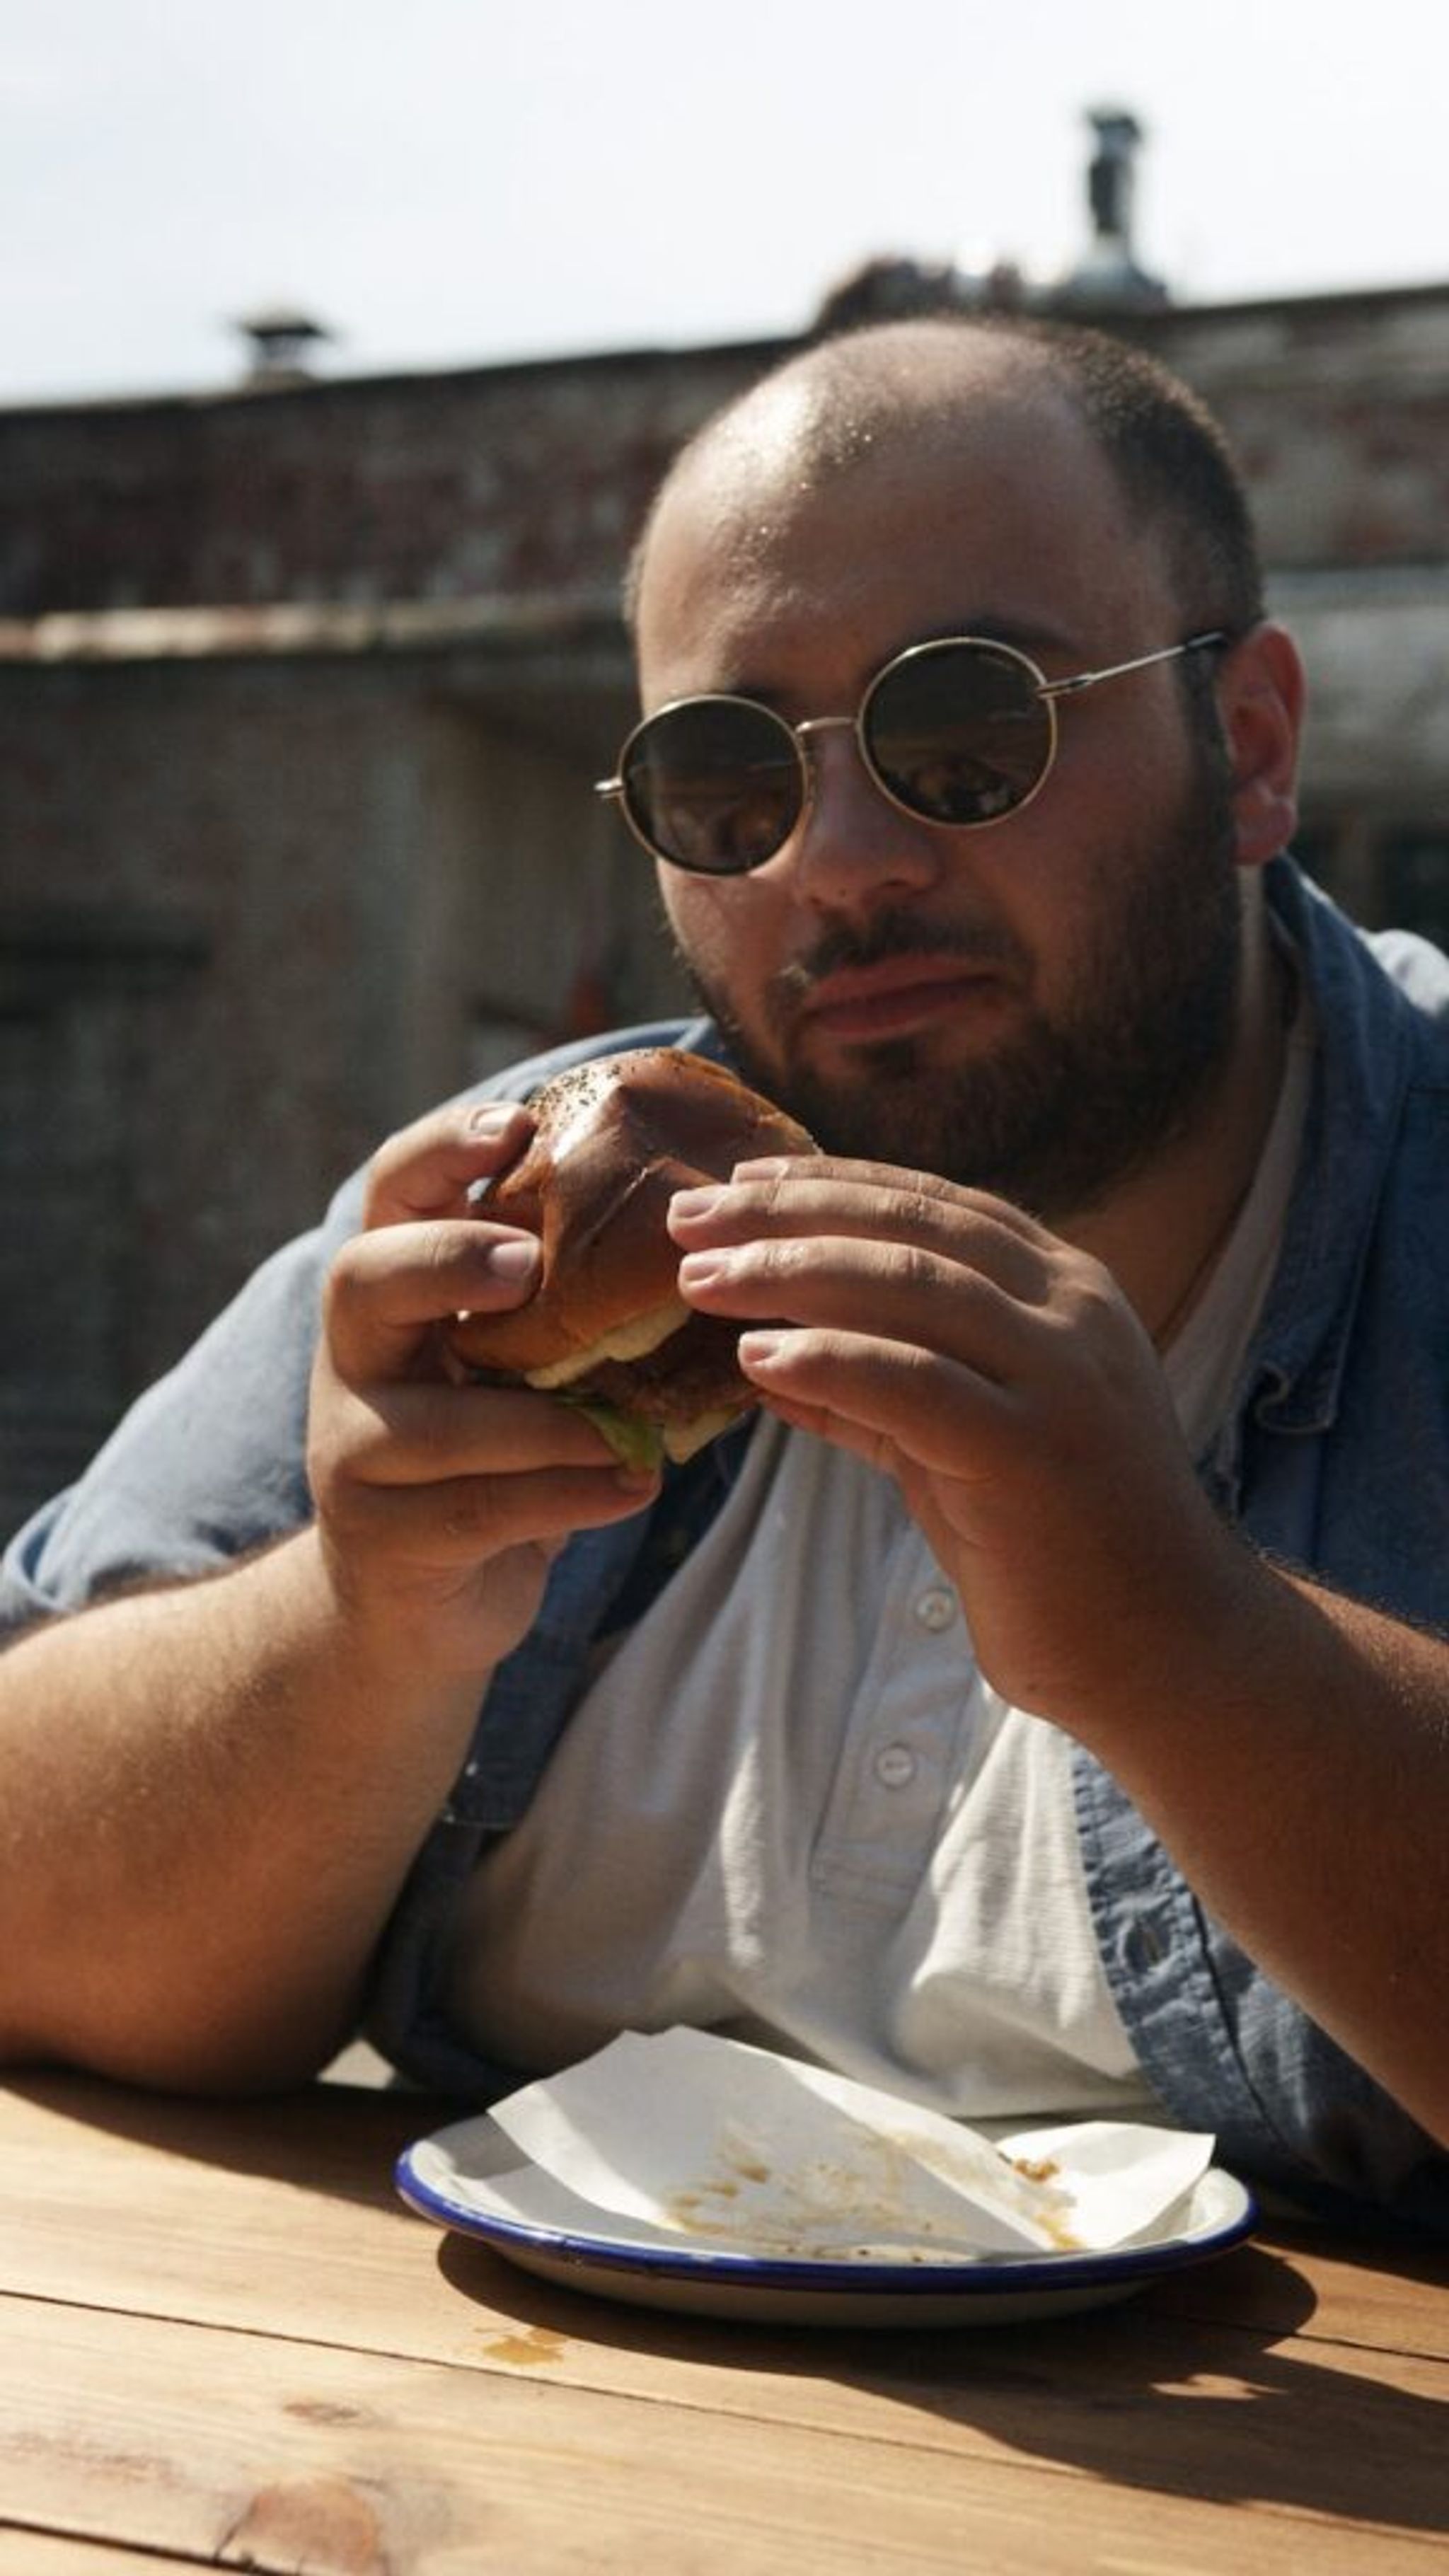 chubby man with a hamburger